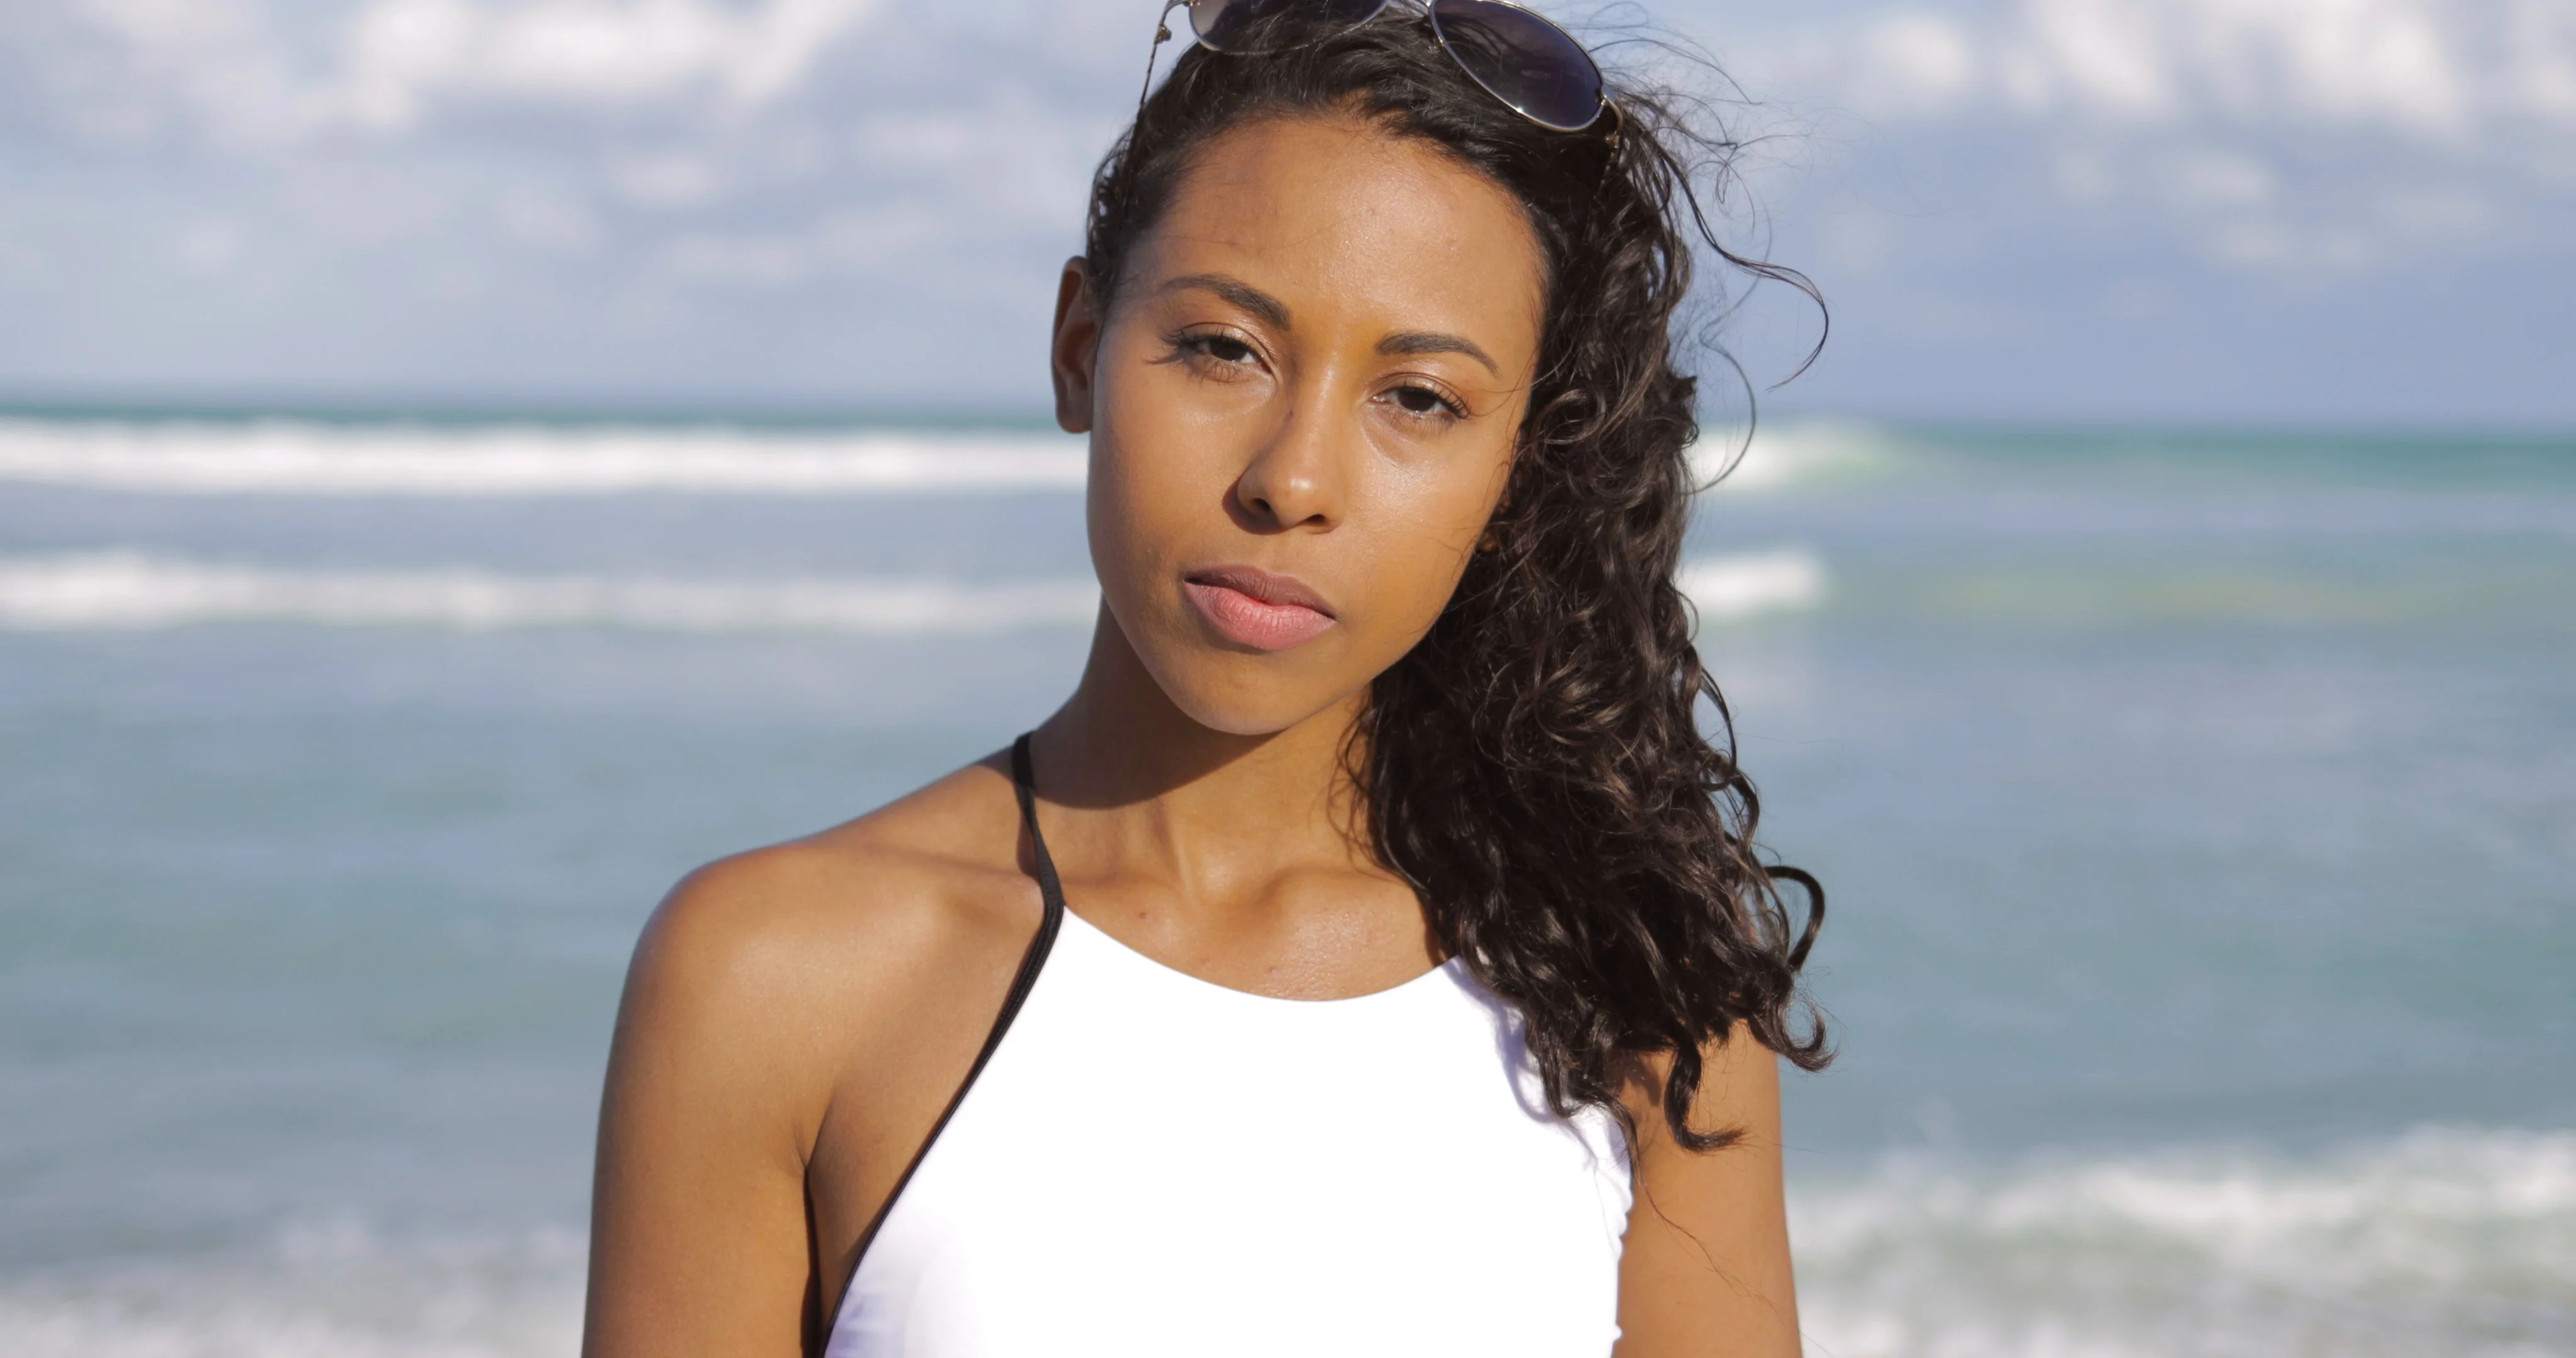 Beautiful Black Woman Portrait Bikini Beach Stock Photo 23907691